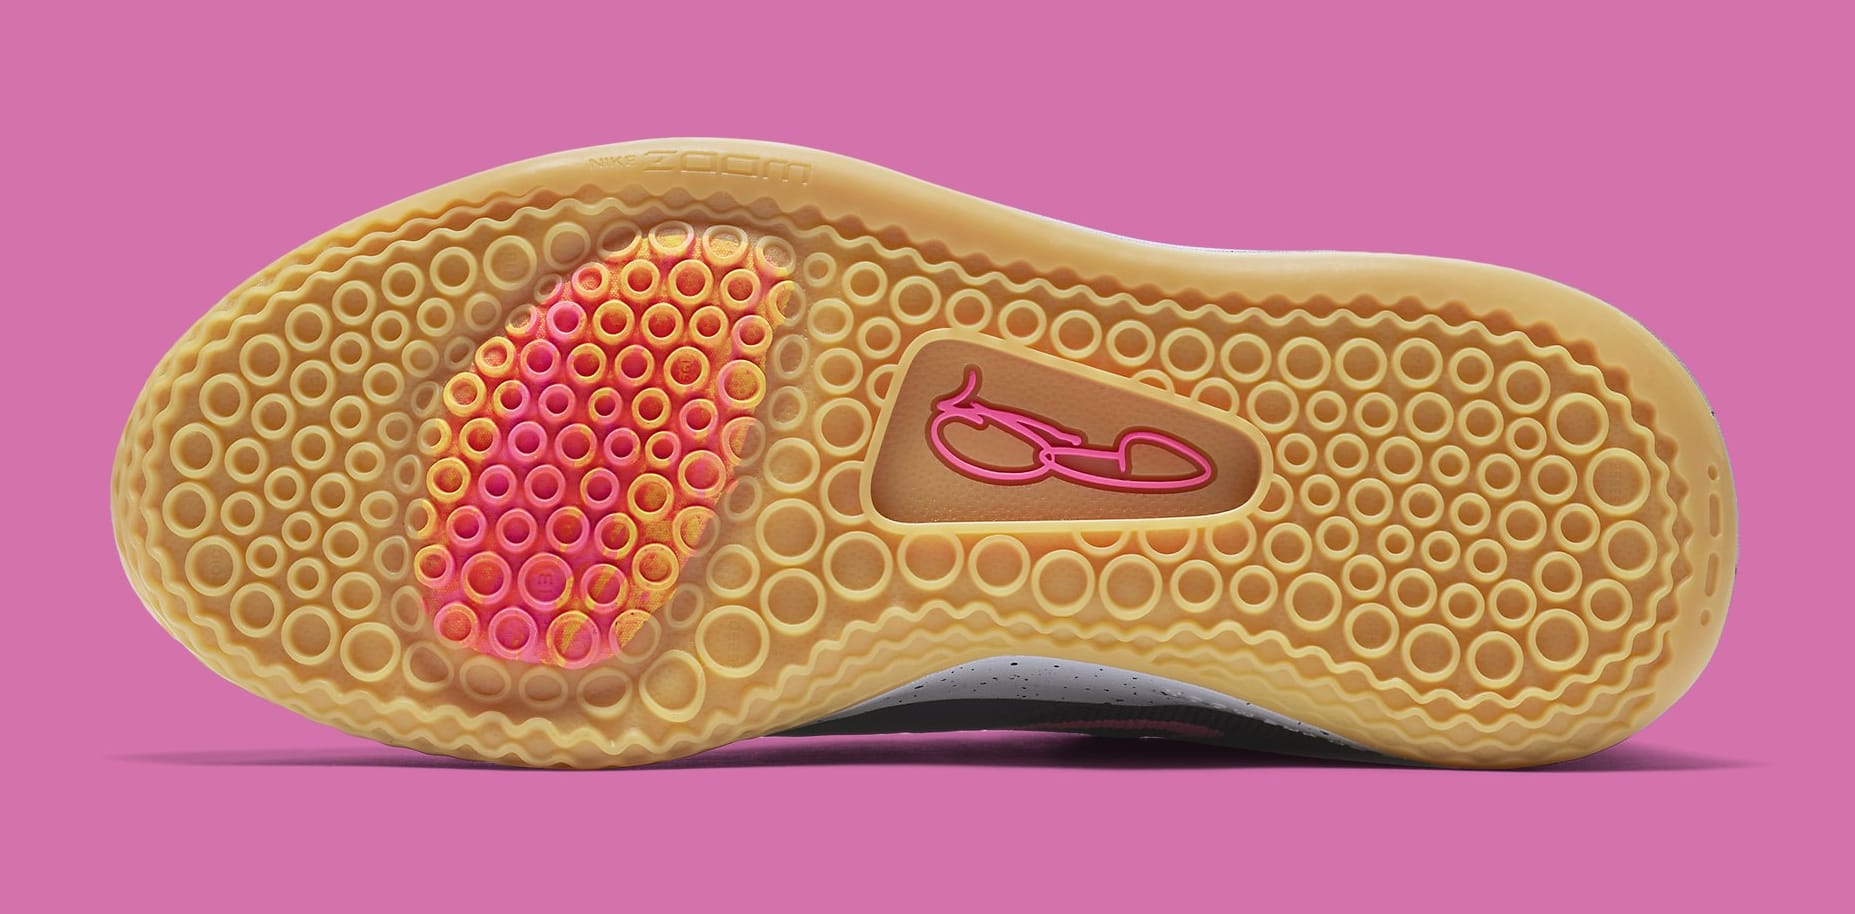 Sneakers Release: Nike PG 3 “Obsidian/Pink Blast” Men